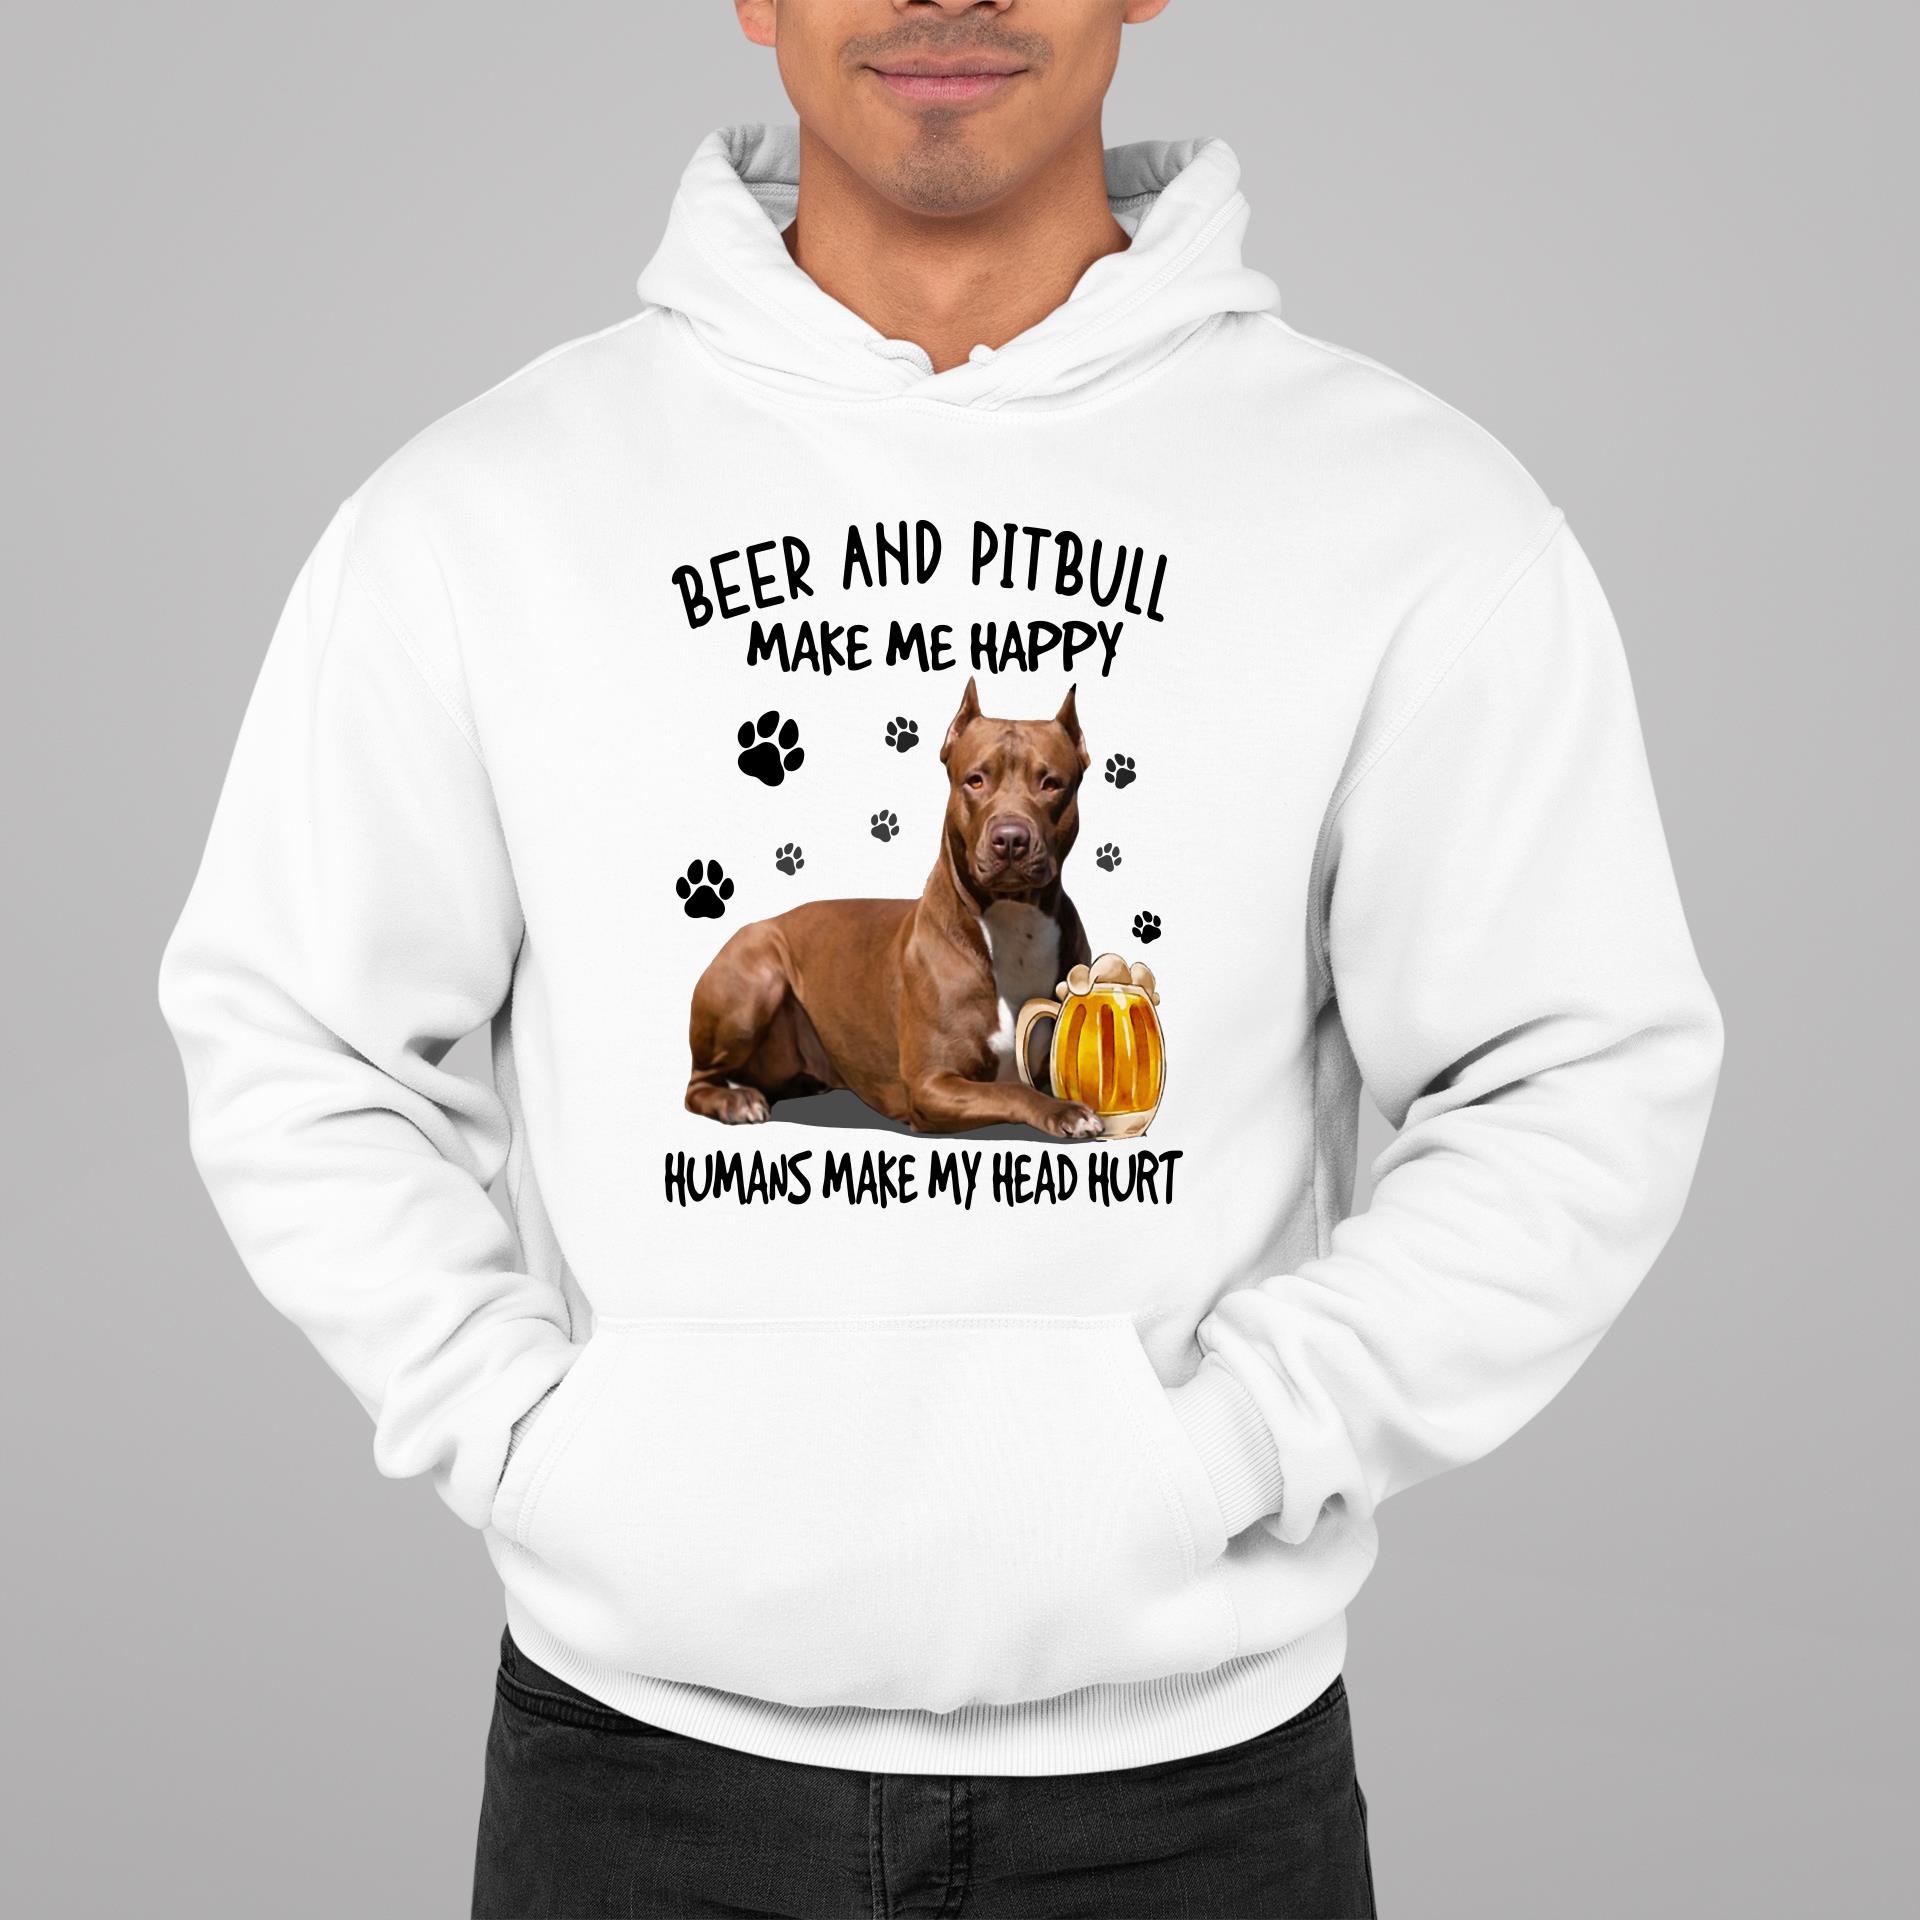 Beer Pitbull Make Happy Humans Make Head Hurt Shirt